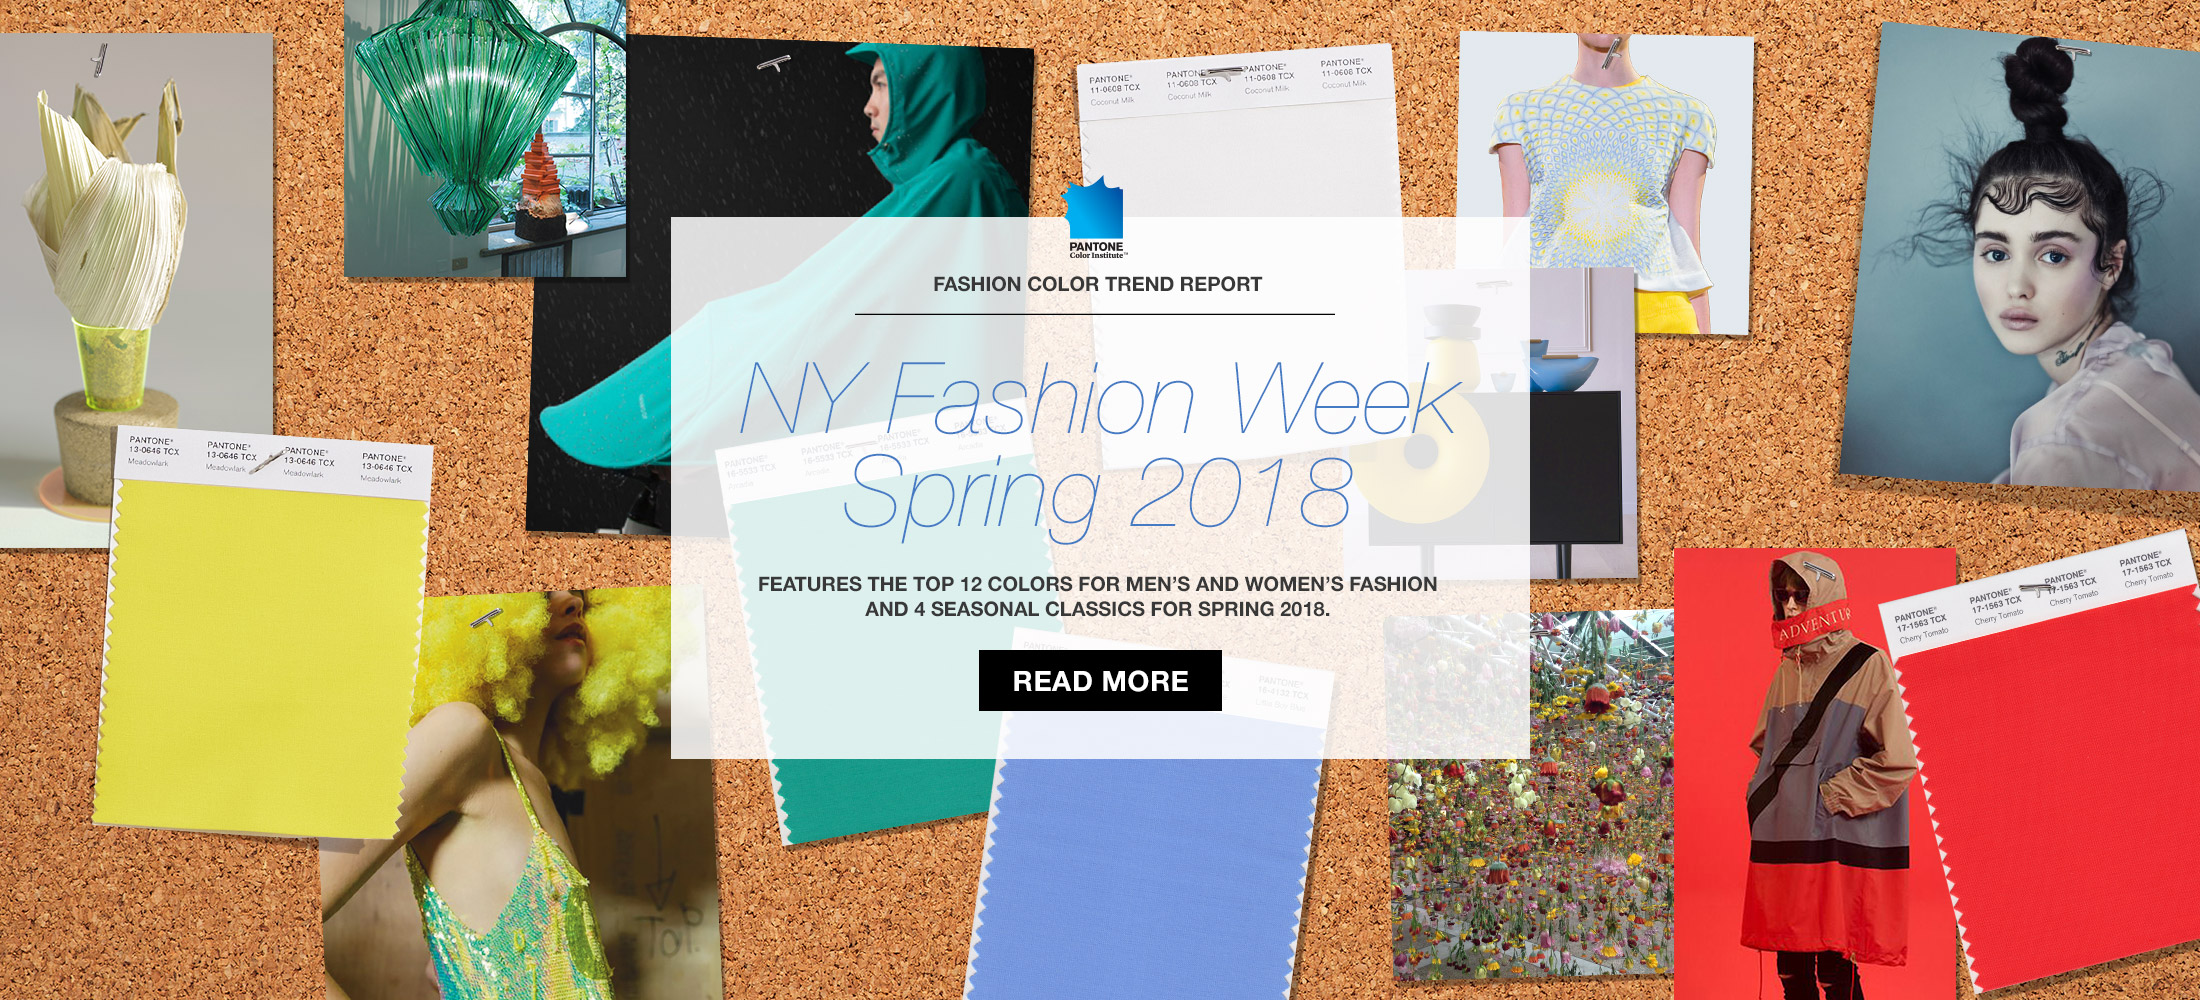 pantone-fashion-color-trend-report-new-york-frühling-sommer-2018-das-leben-ist-schoen